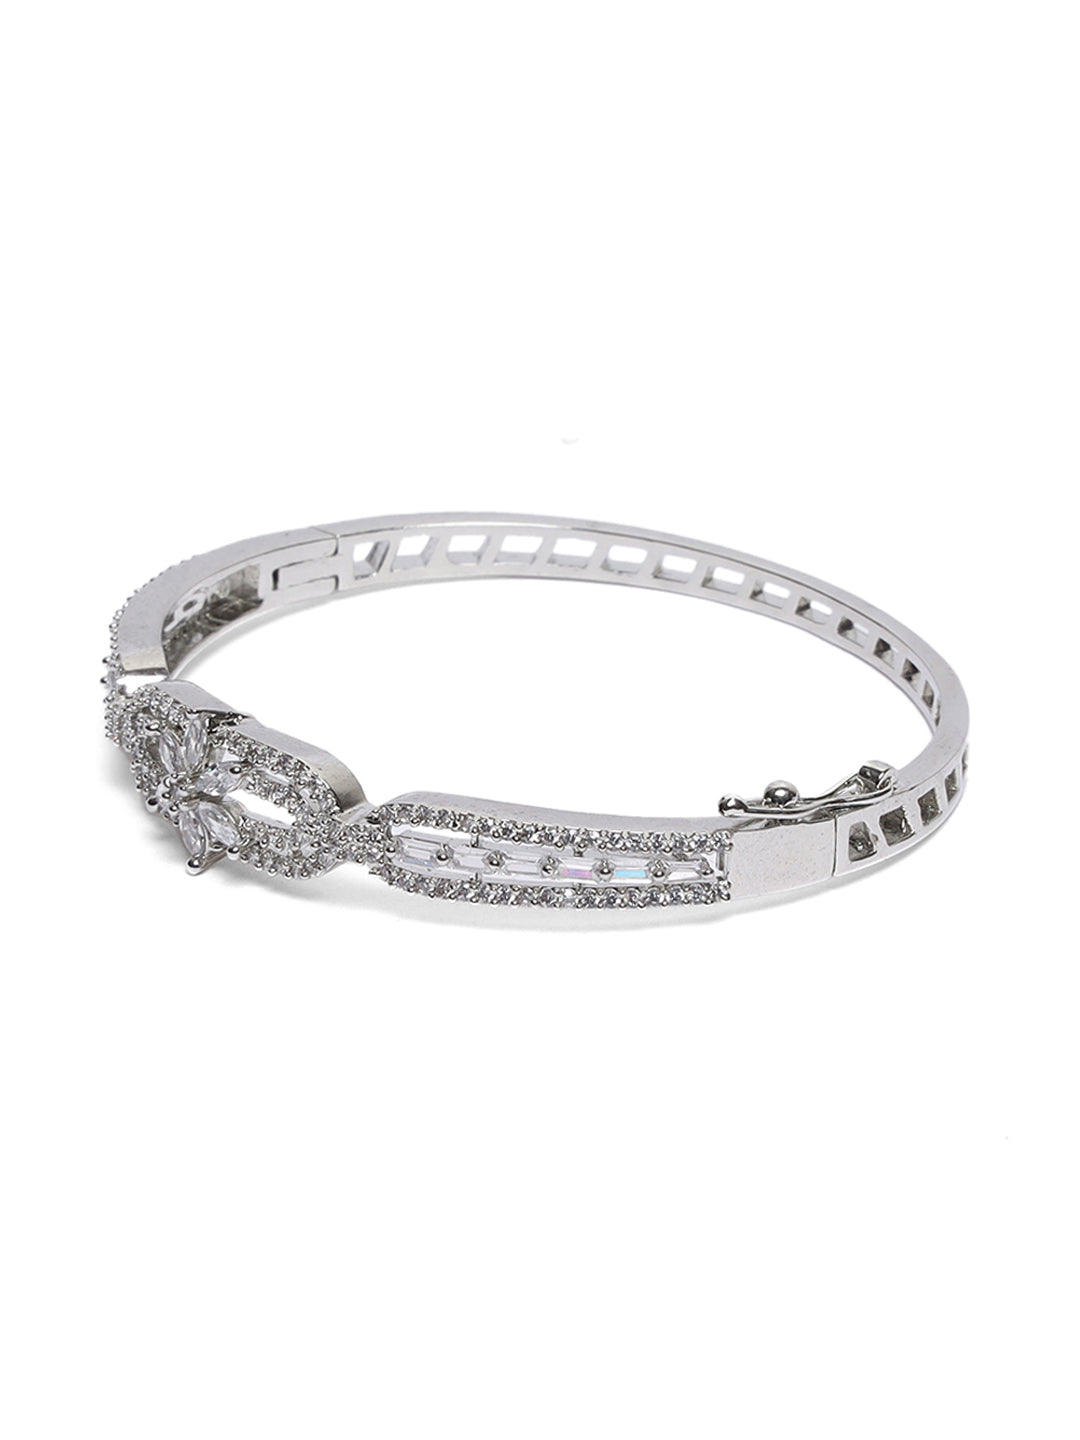 Buy Online American Diamond Bracelet